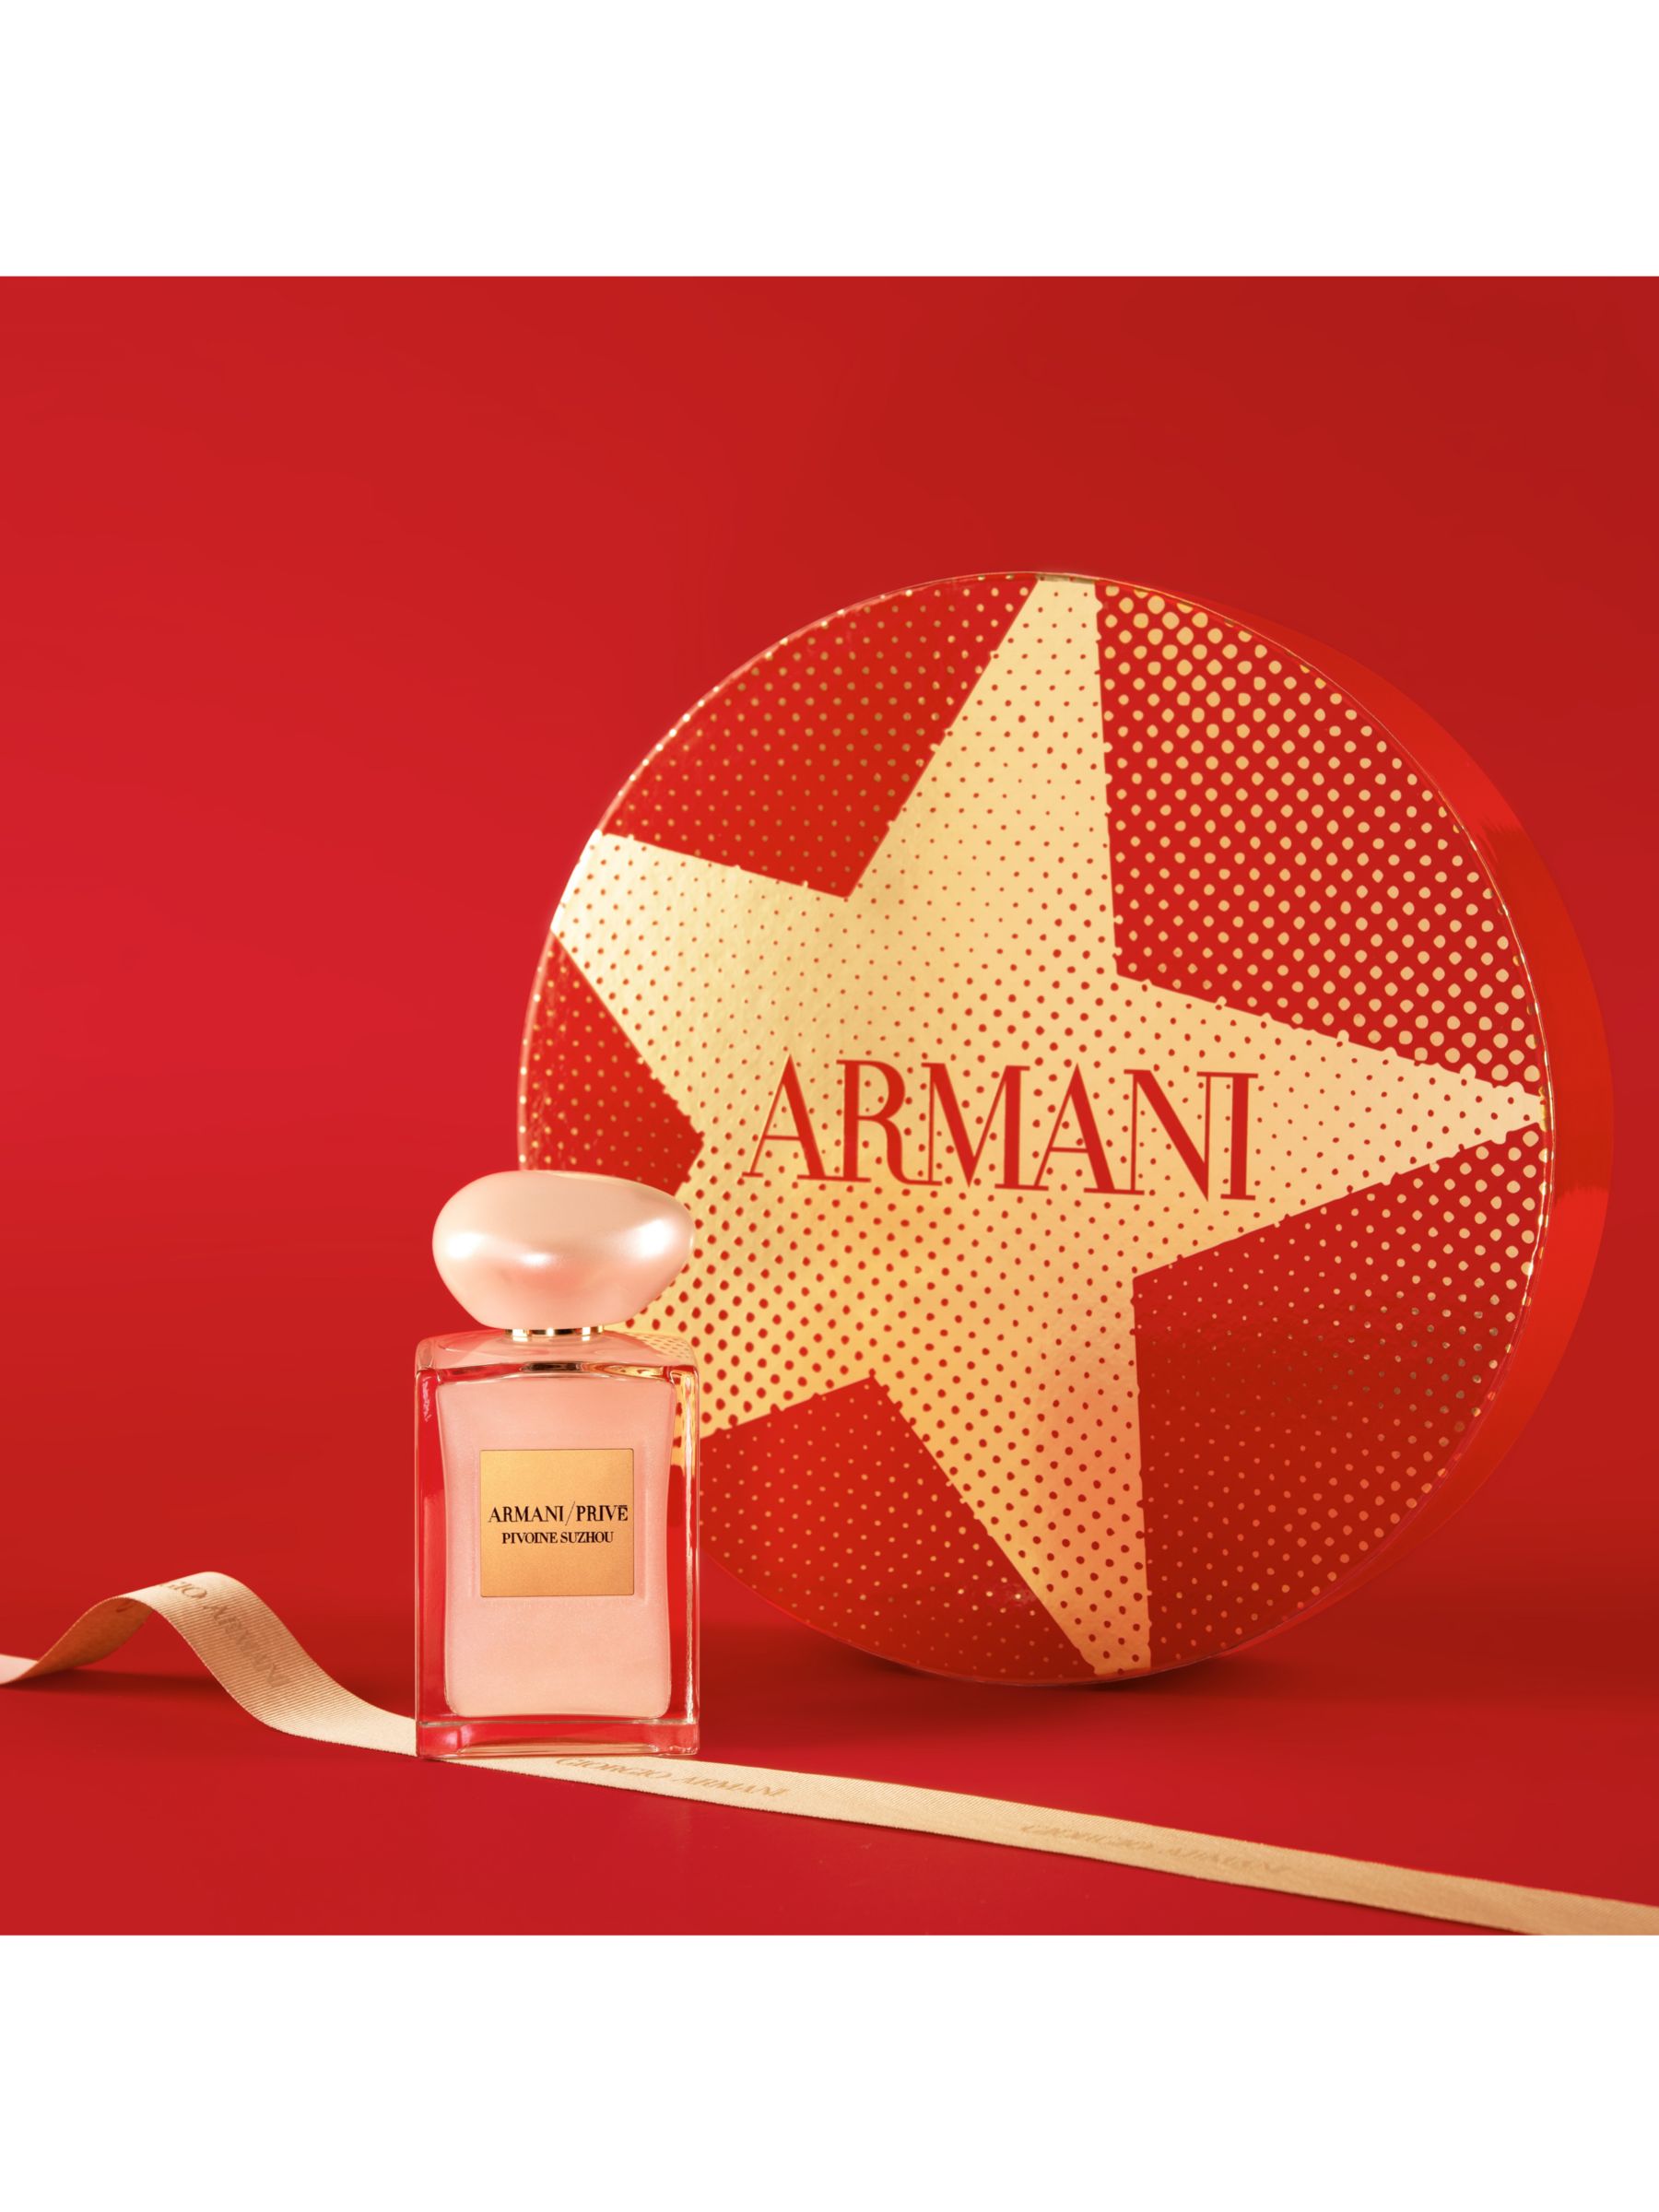 armani suzhou limited edition